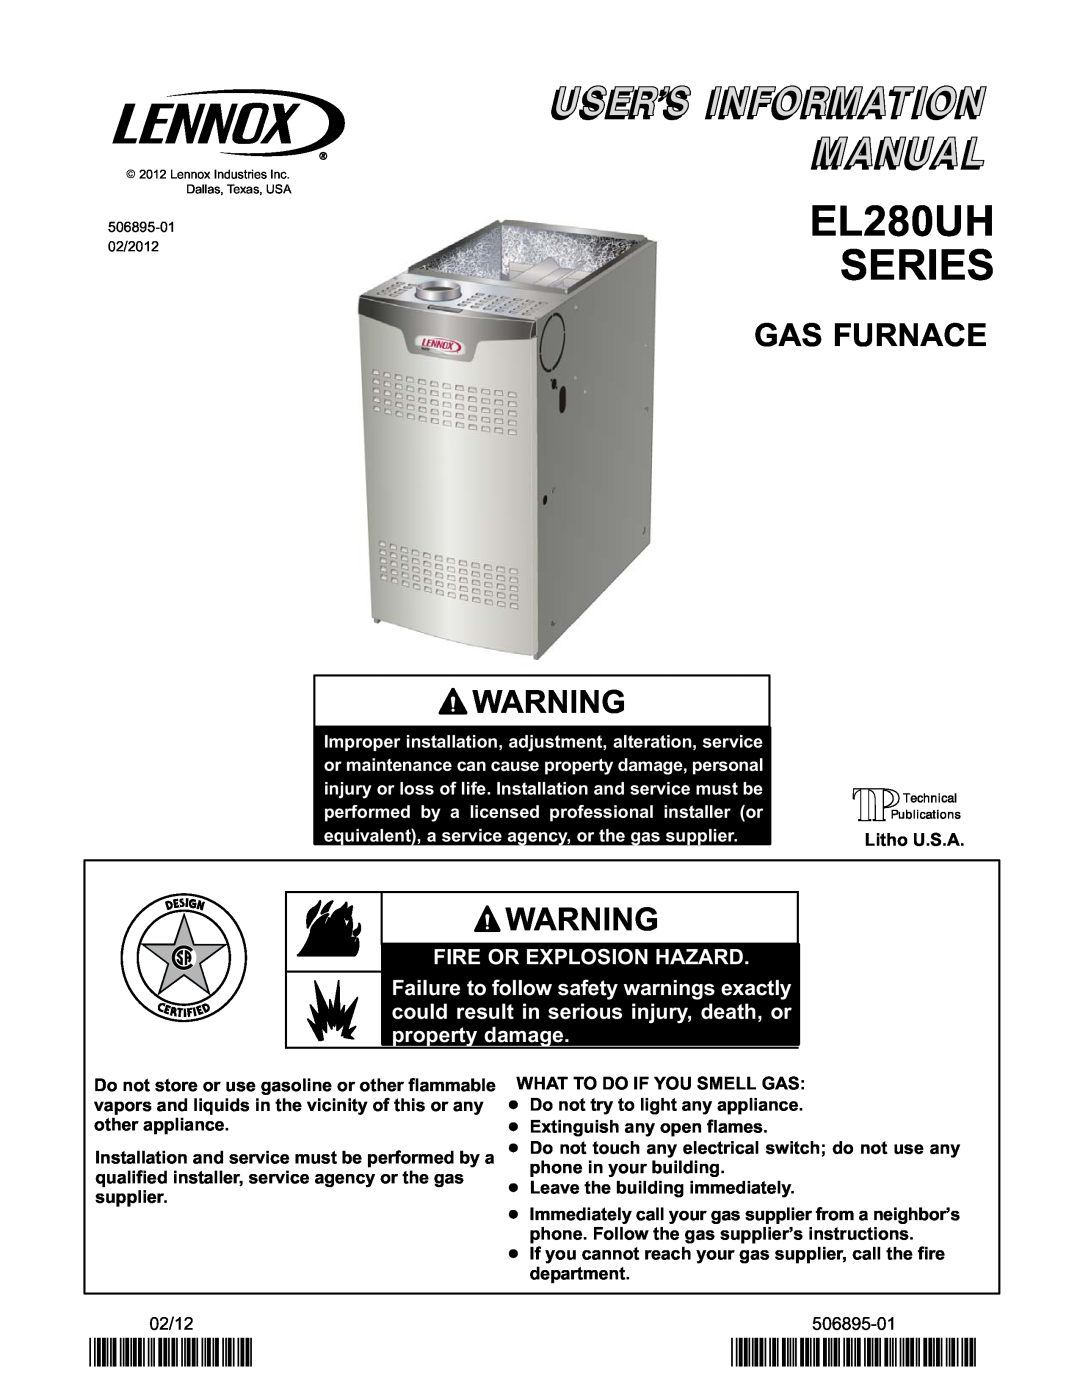 Lennox International Inc Elite Series Gas Furnace Upflow/Horizontal Air Discharge installation instructions 2P0212 